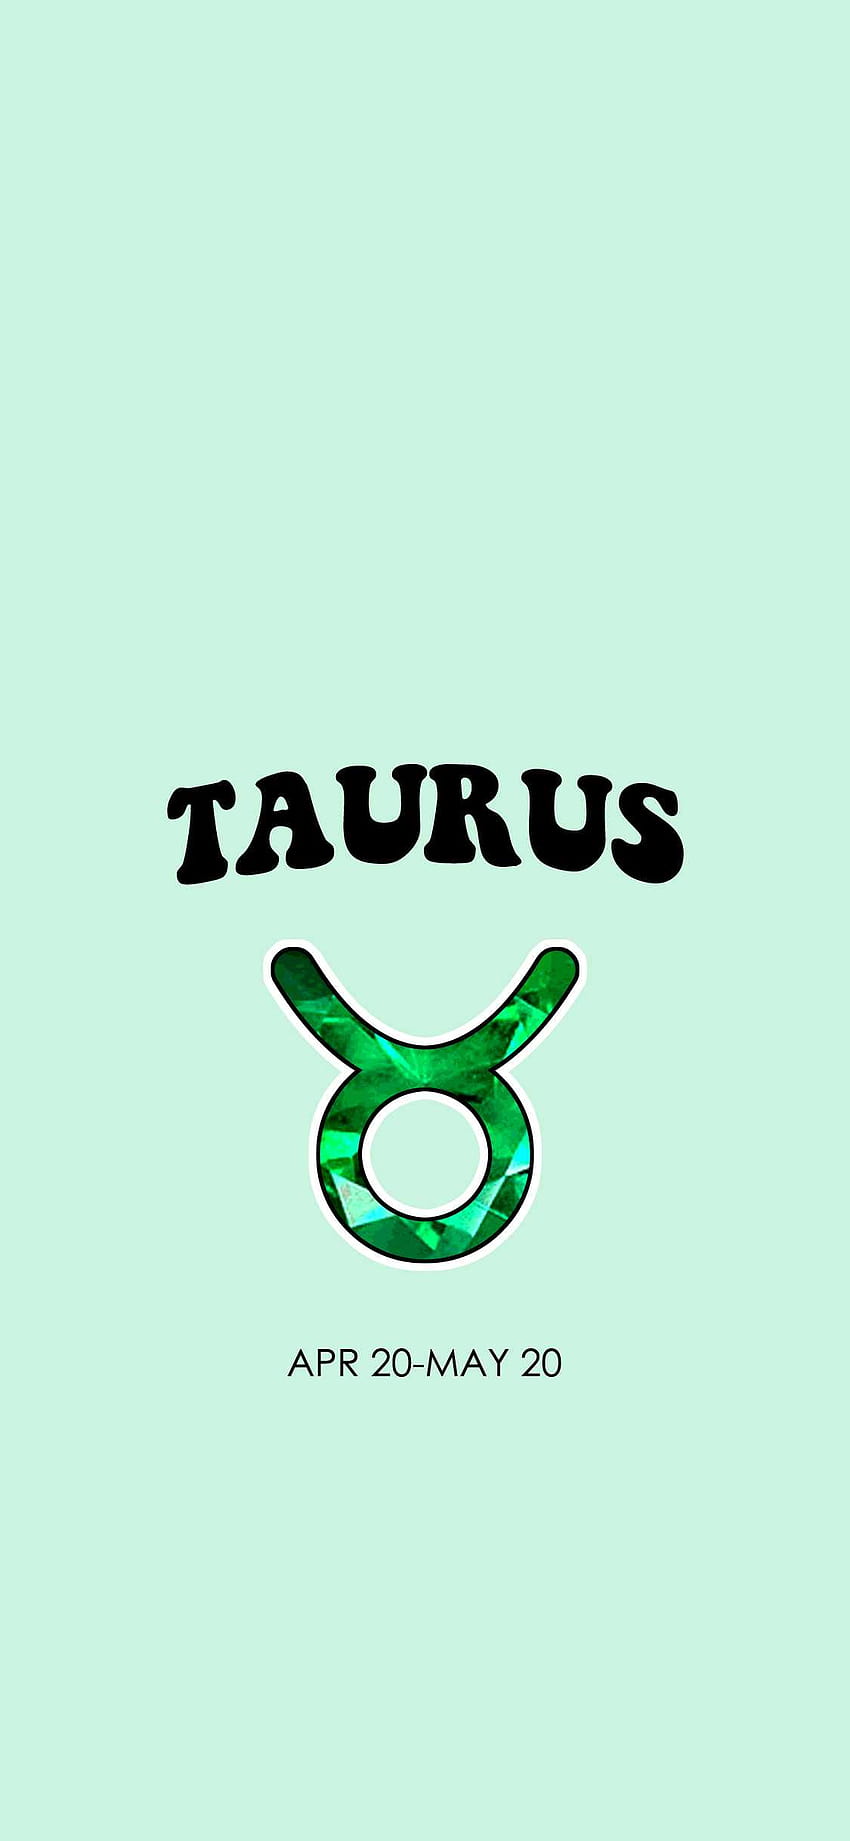 Zodiak Taurus, taurus lucu yang estetis wallpaper ponsel HD